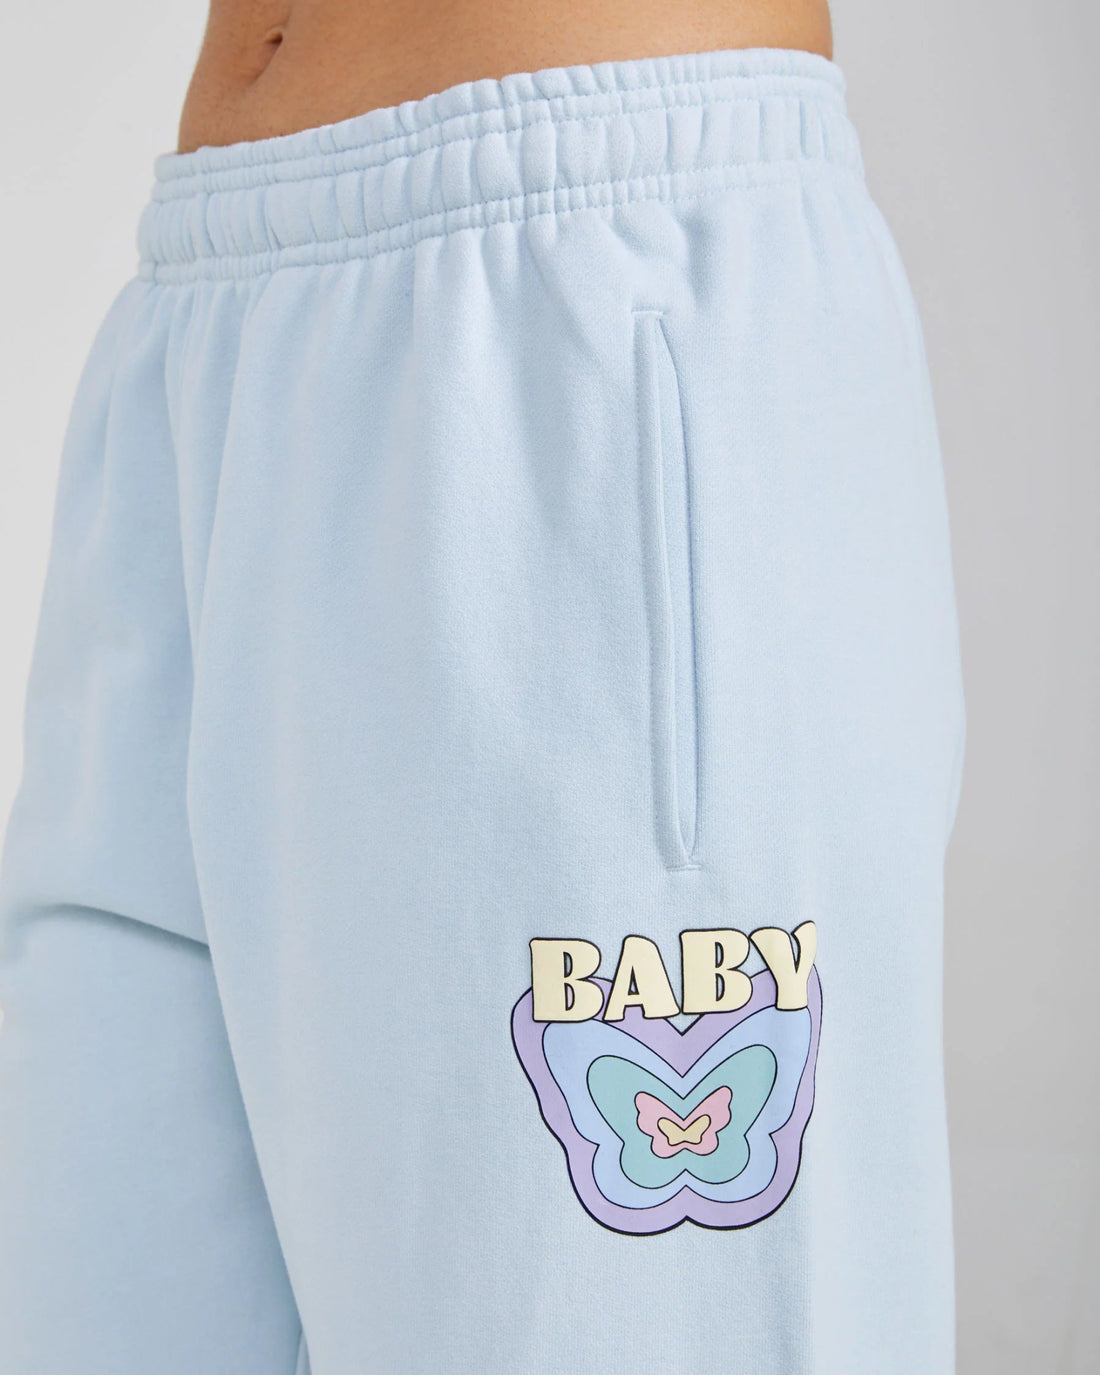 Shop Samii Ryan Baby Sweatpants - Premium Hoodie from Samii Ryan Online now at Spoiled Brat 